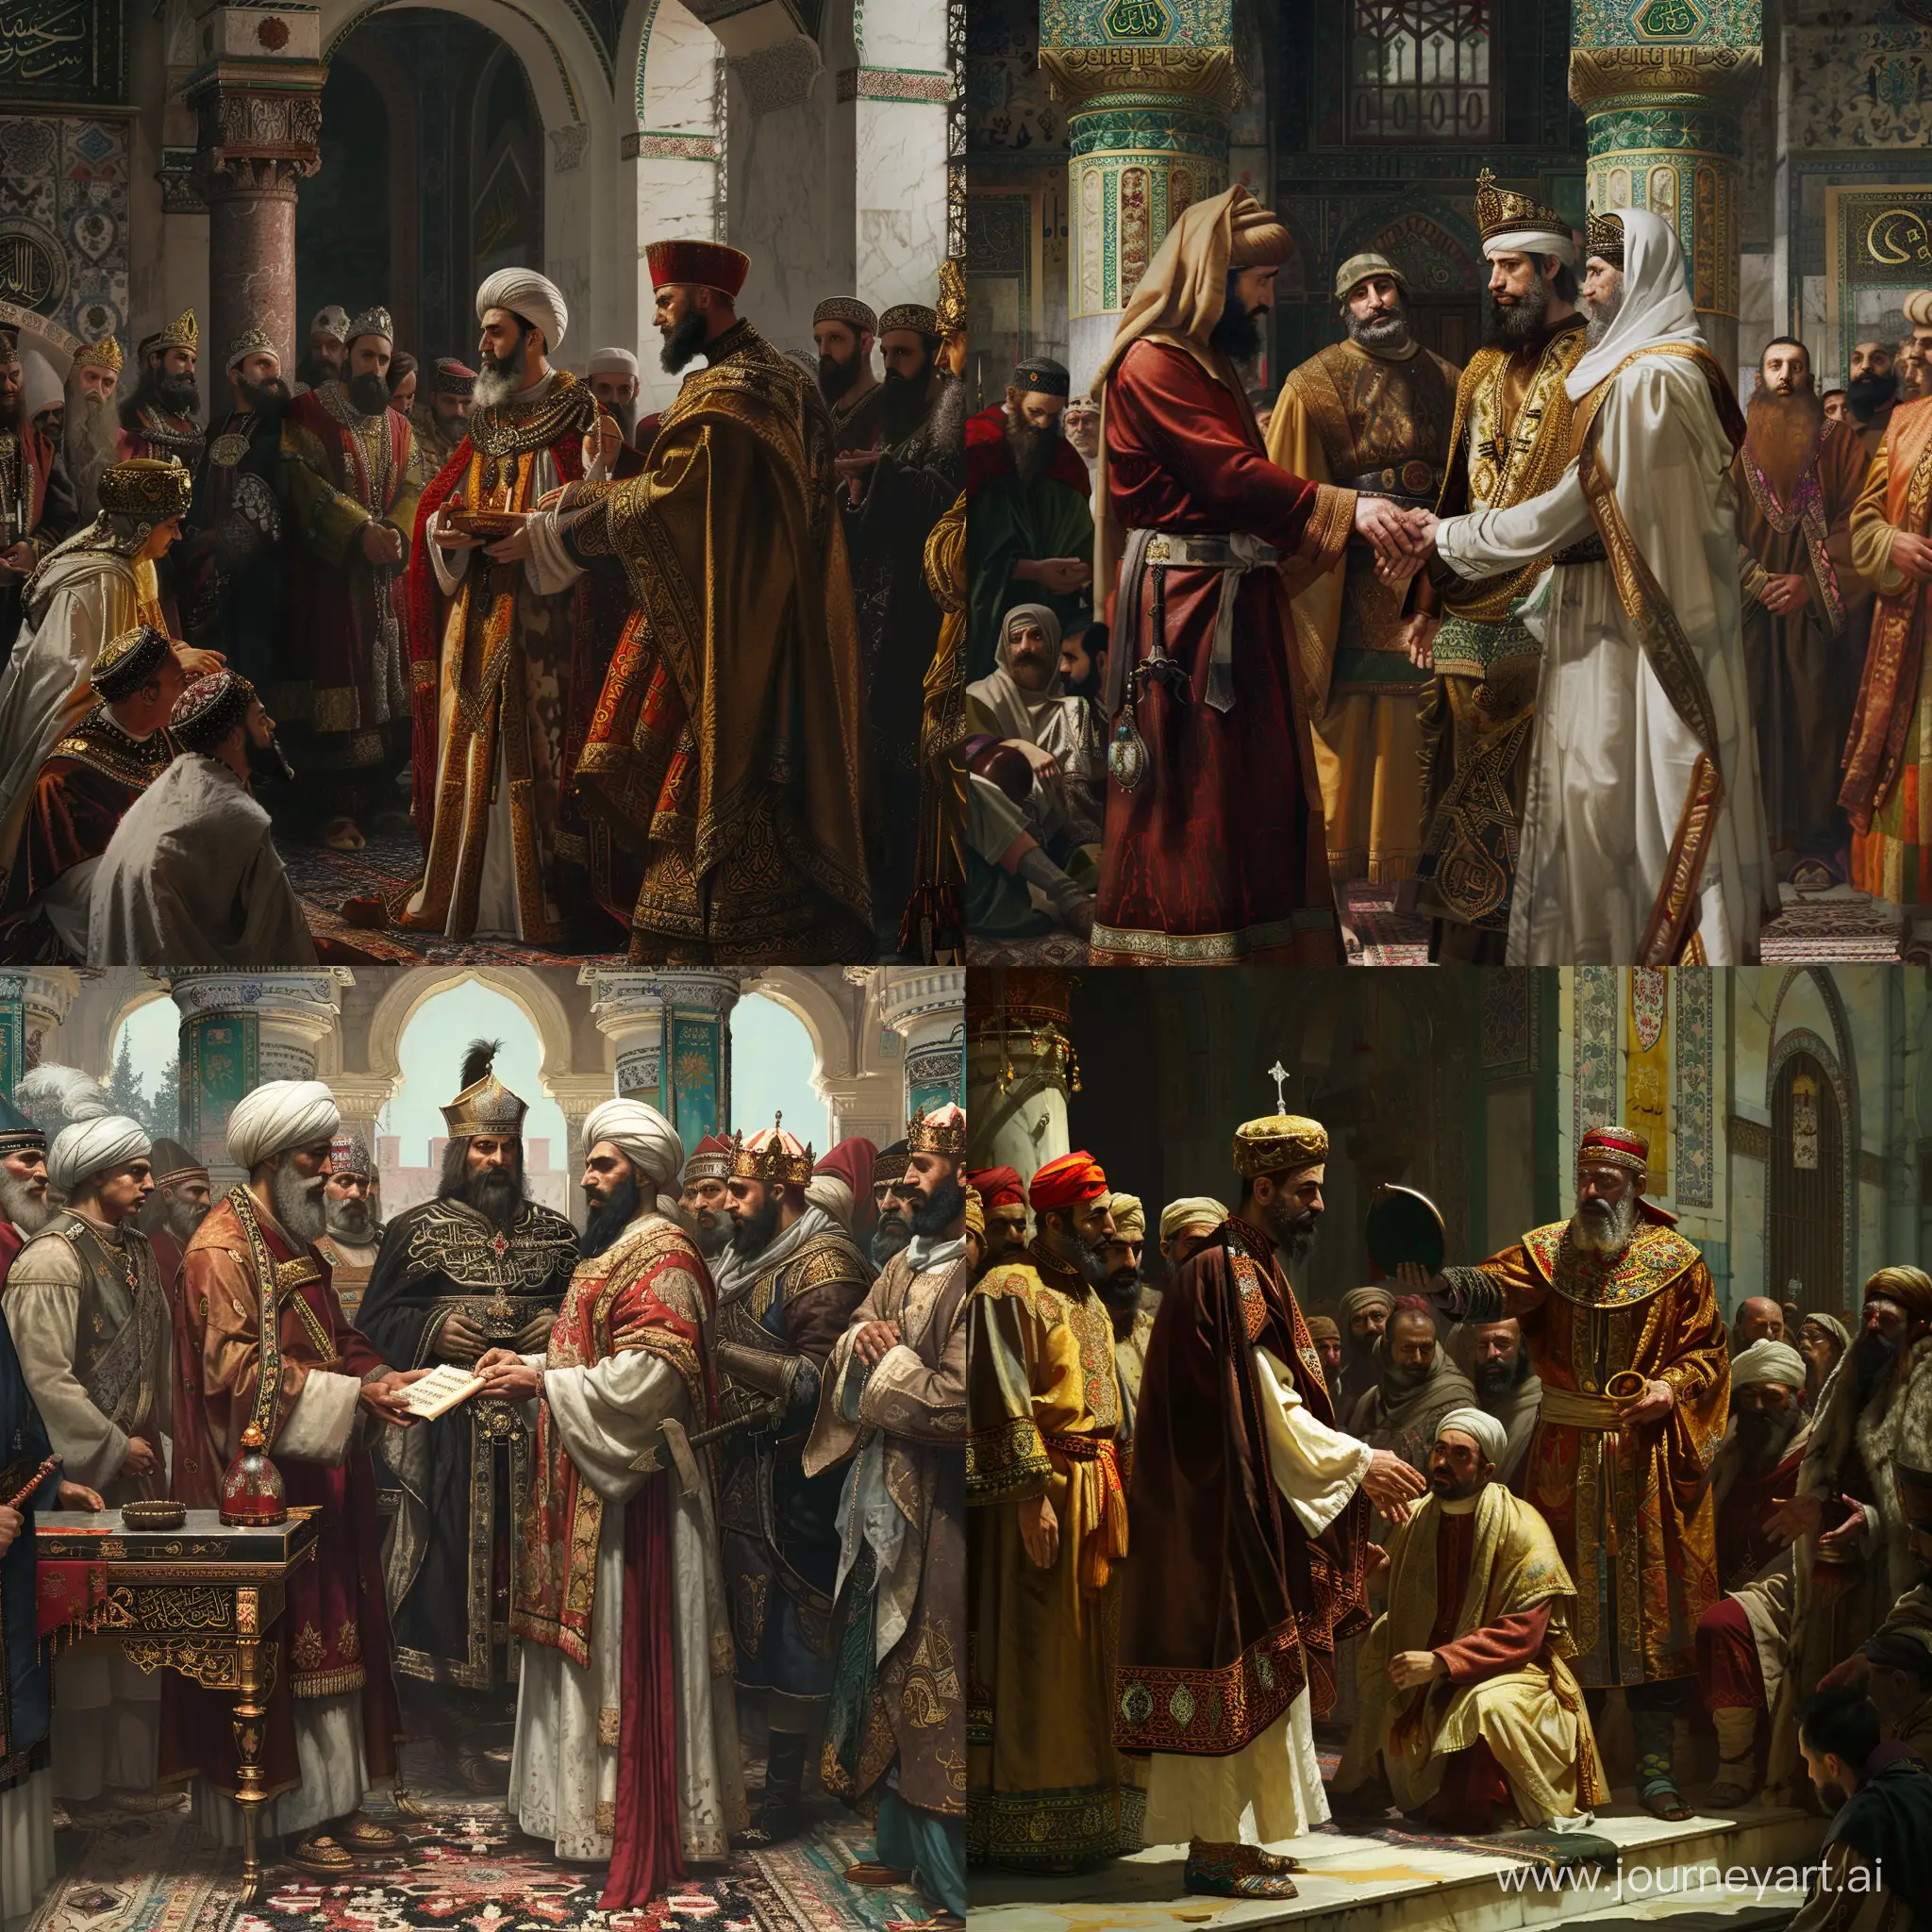 Byzantine-Greek-Prince-John-II-Komnenos-Converts-to-Islam-in-Detailed-Renaissance-Style-Ceremony